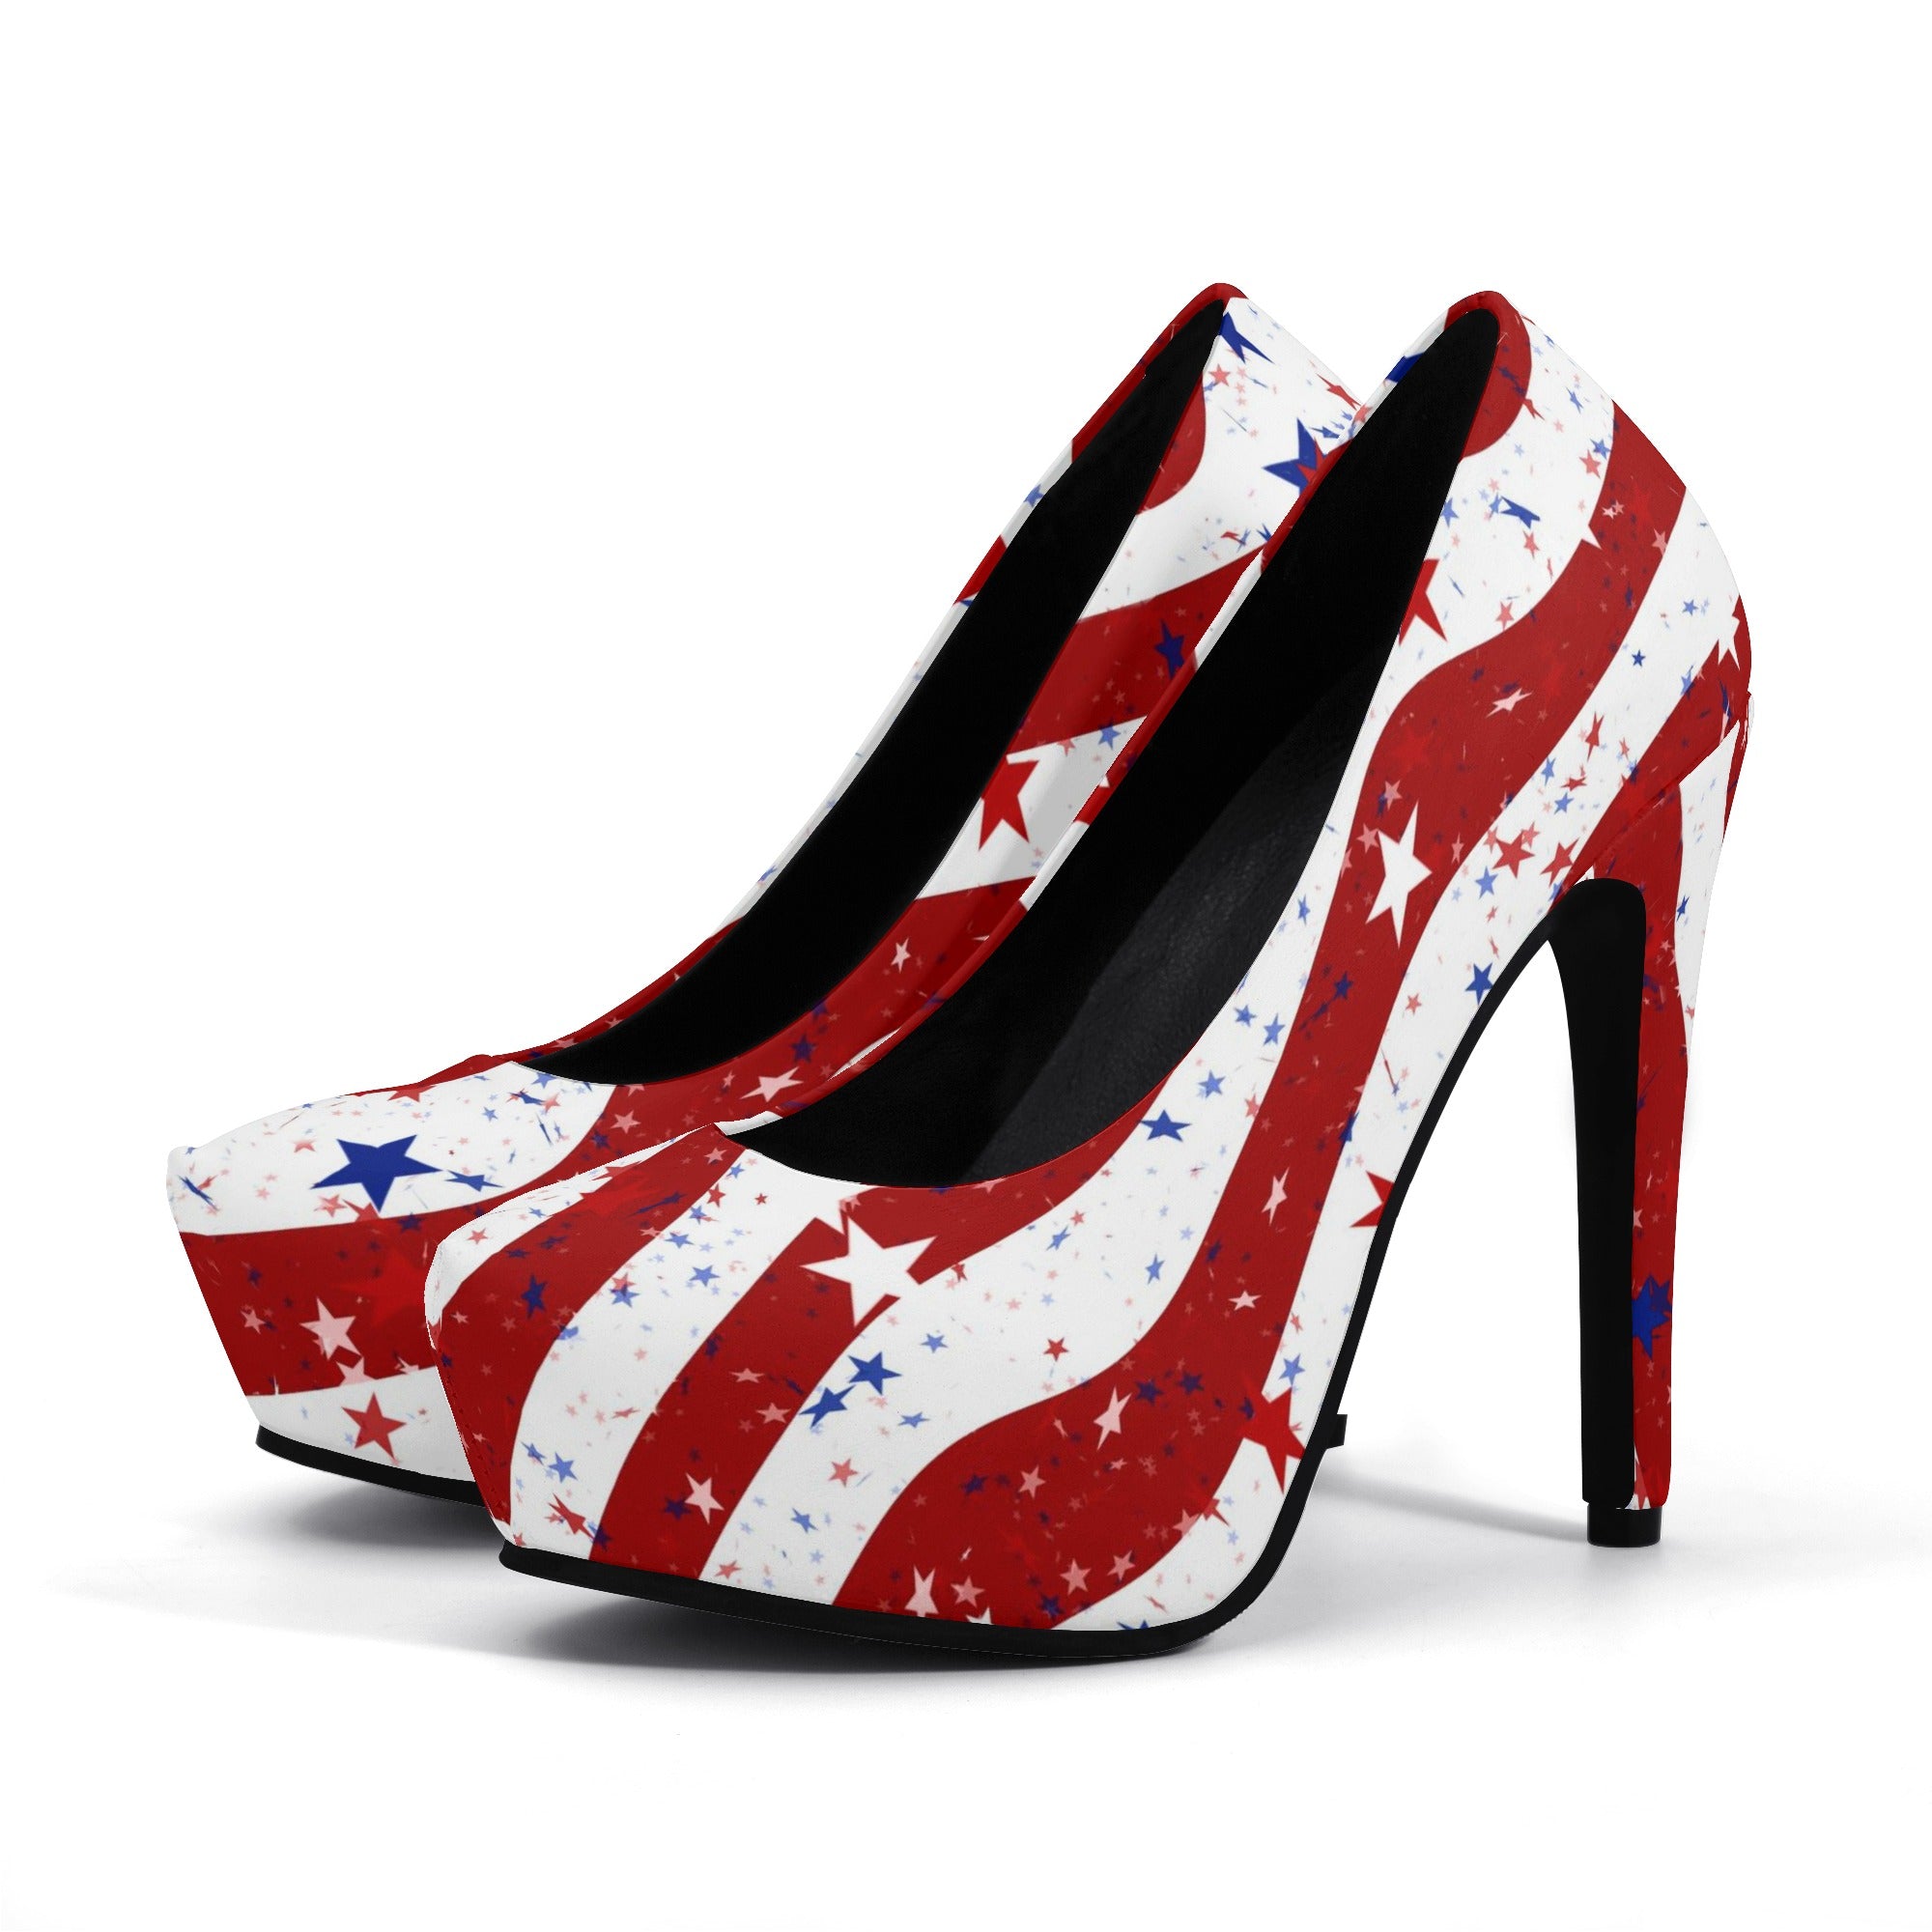    breathtaking-patriotic-american-flag-inspired-platform-pumps-red-stripe-white-stripe-5-inch-heels-oblique-view